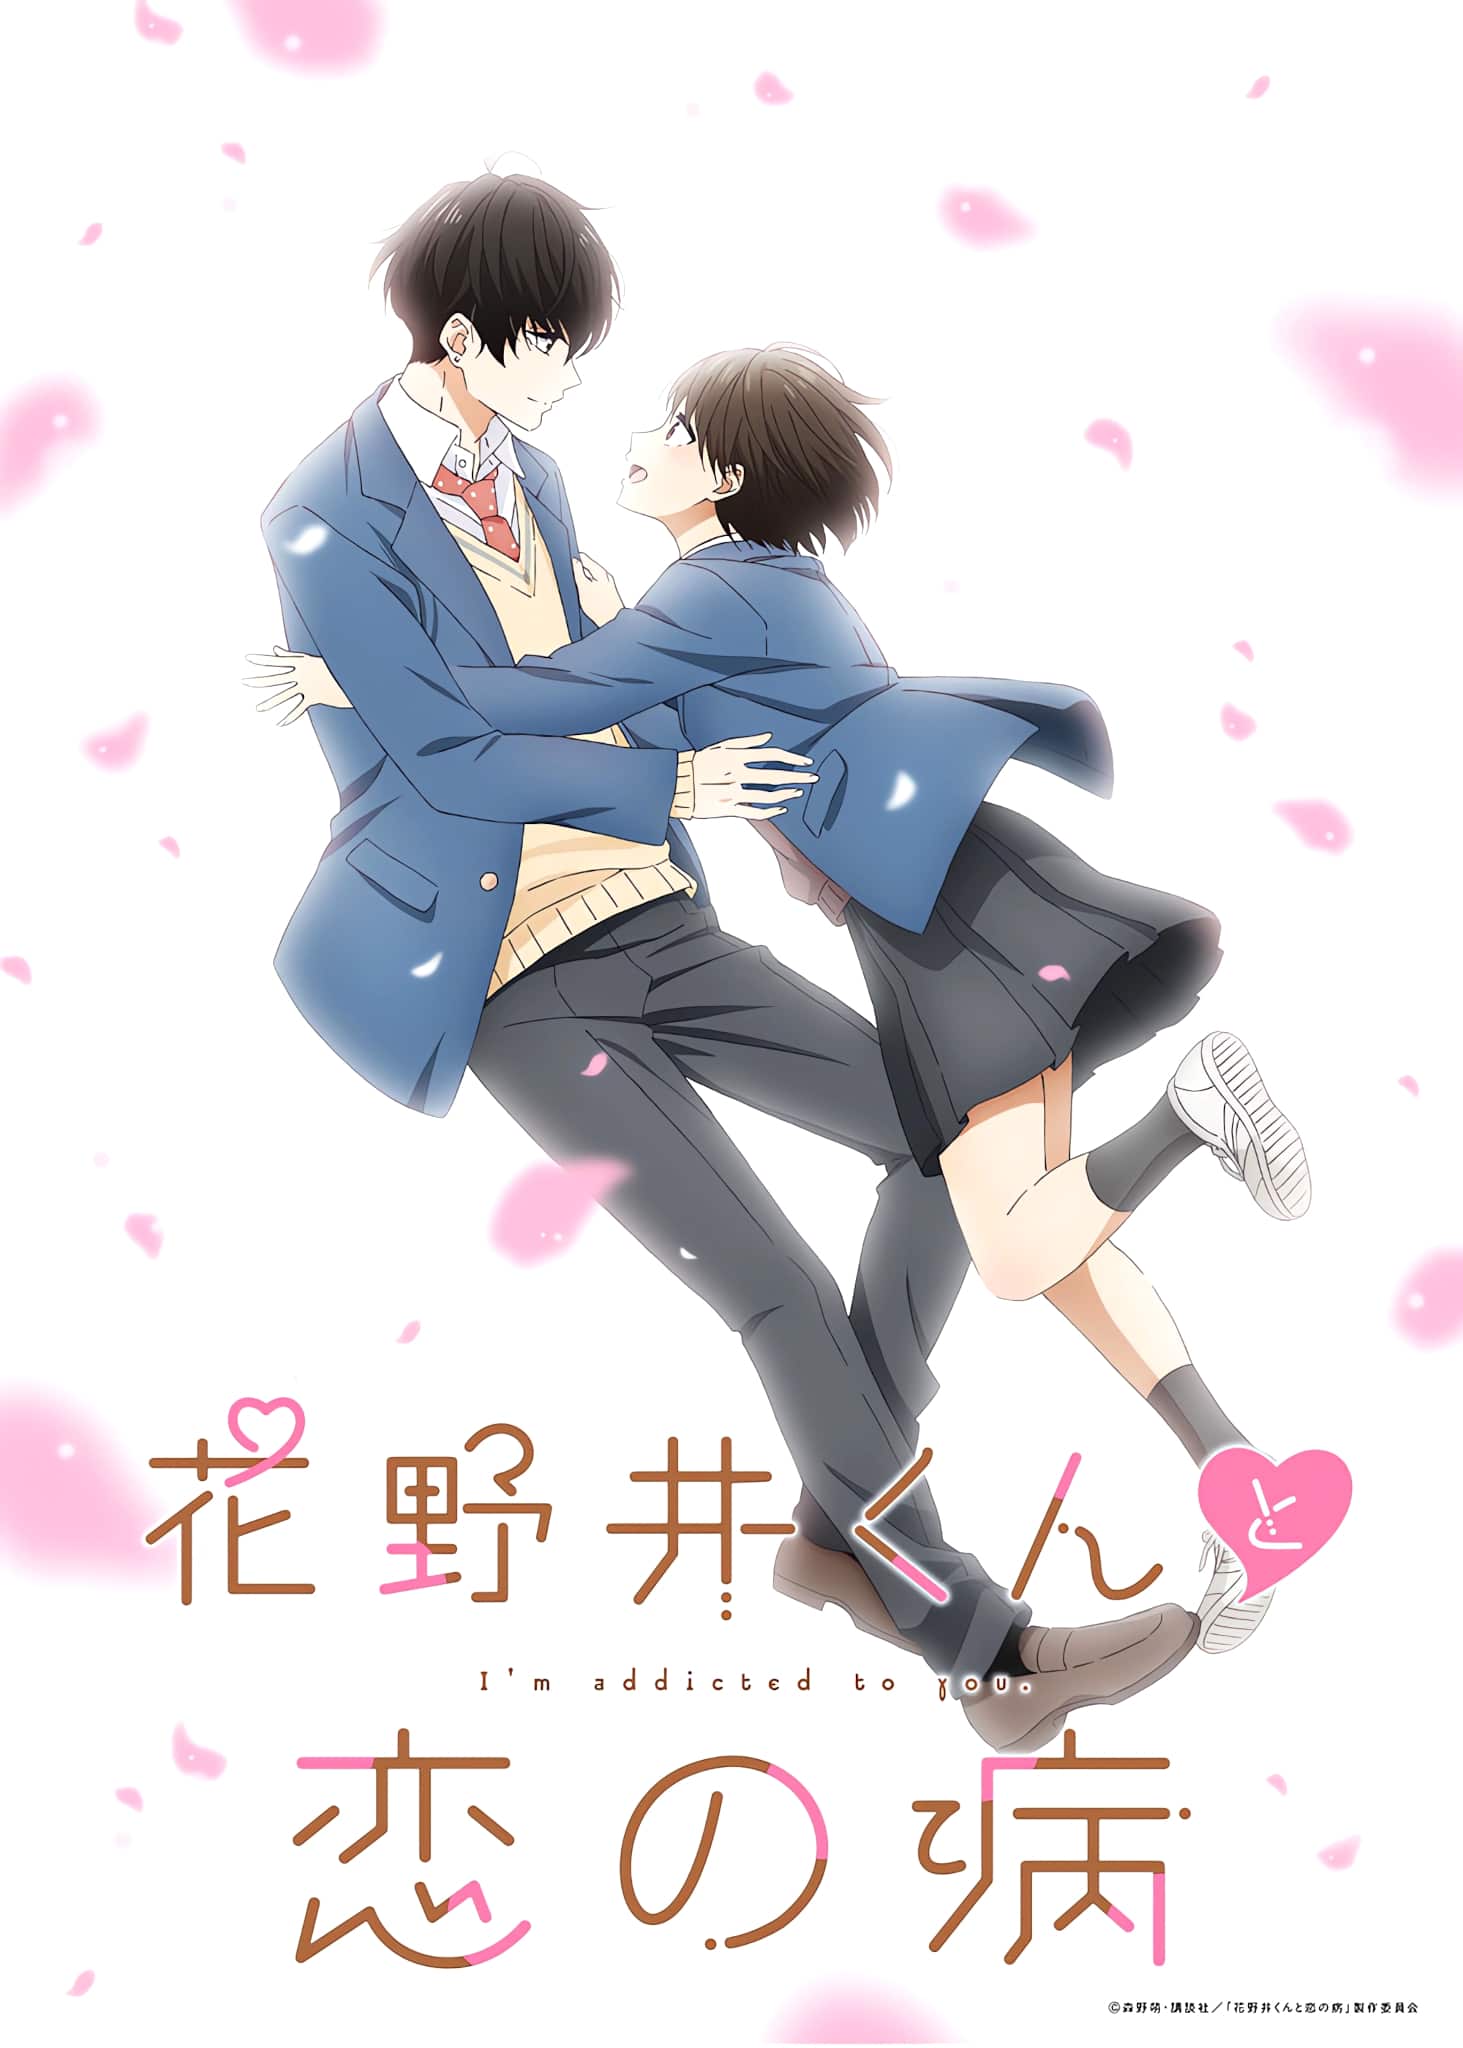 Premier visuel pour lanime Hananoi-kun to koi no yamai (A Condition Called Love)